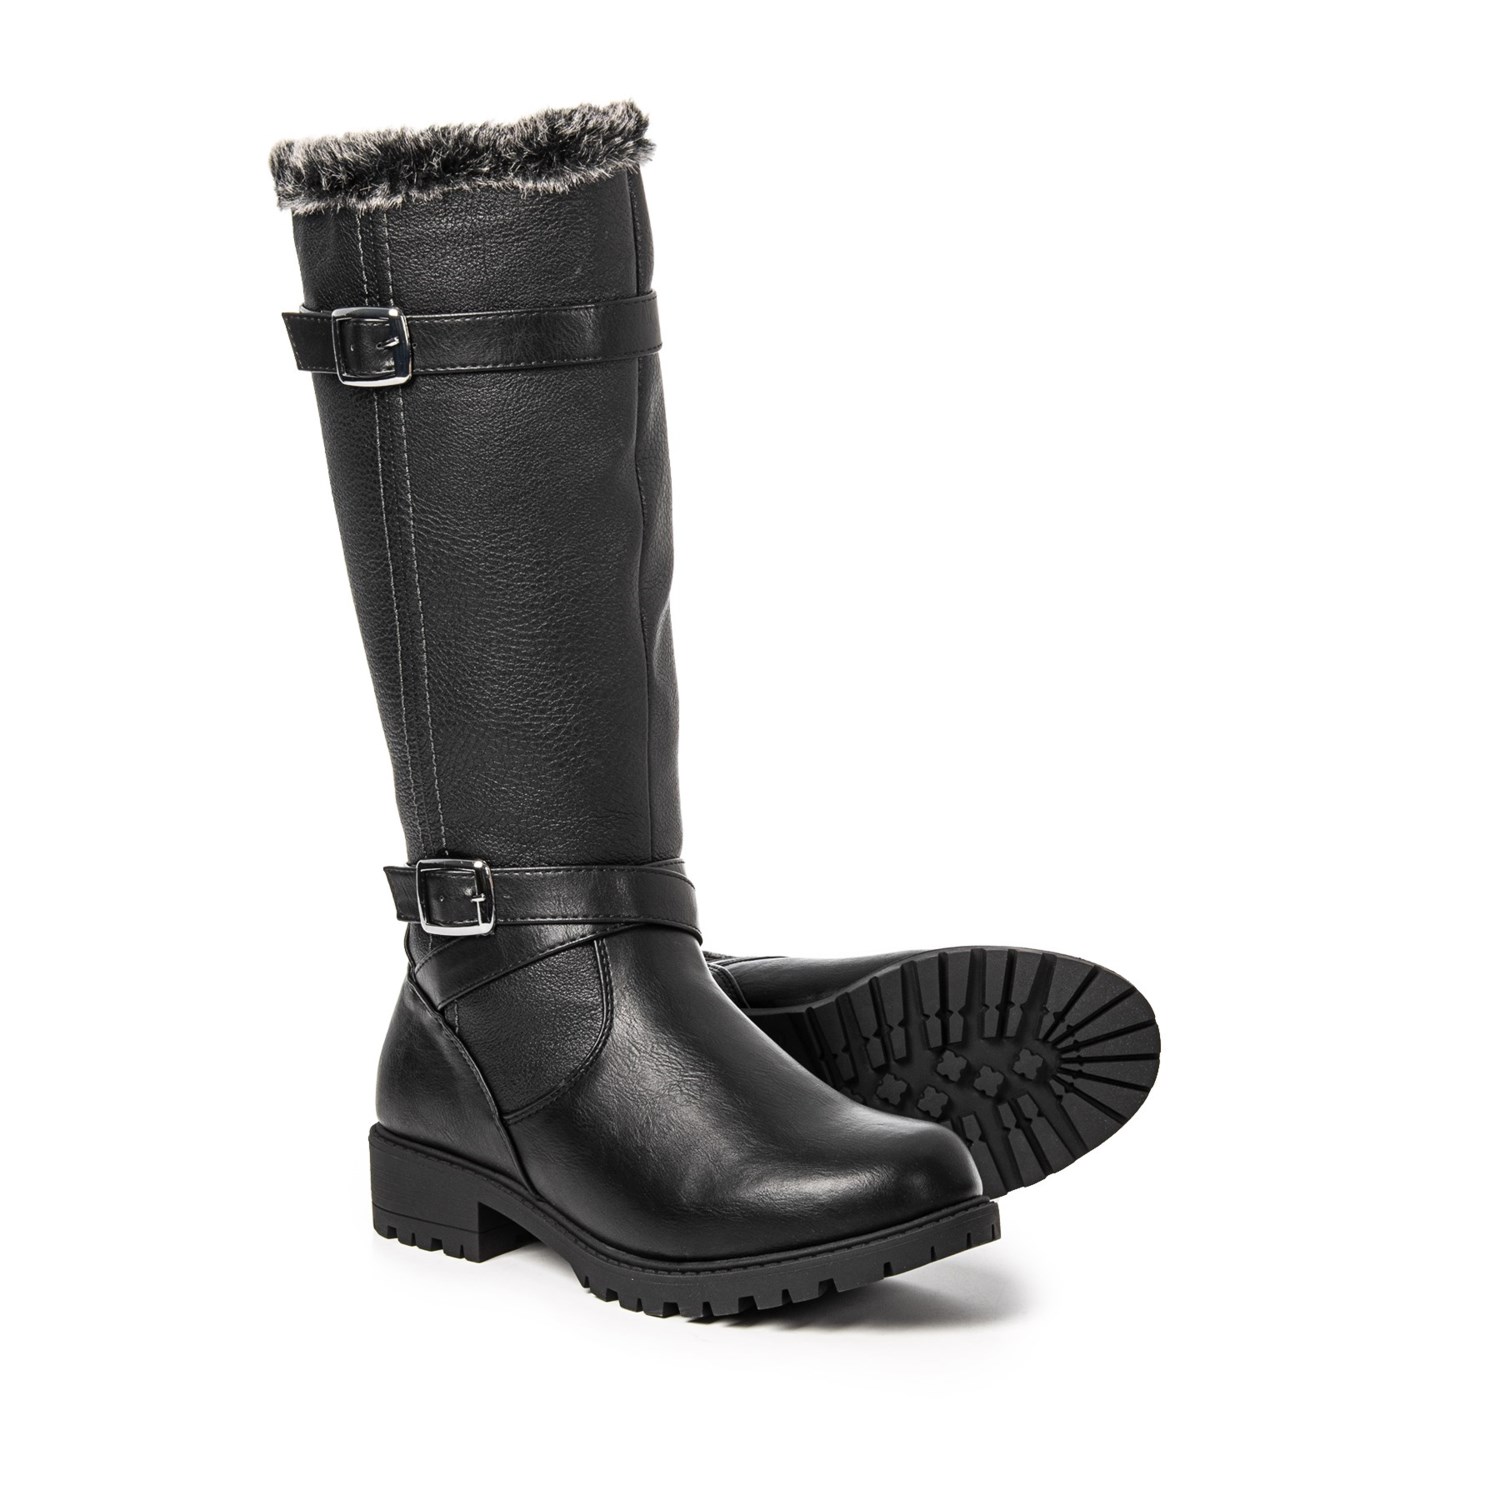 Aquatherm by Santana Canada Blair 4 Tall Snow Boots (For Women) - Save 64%